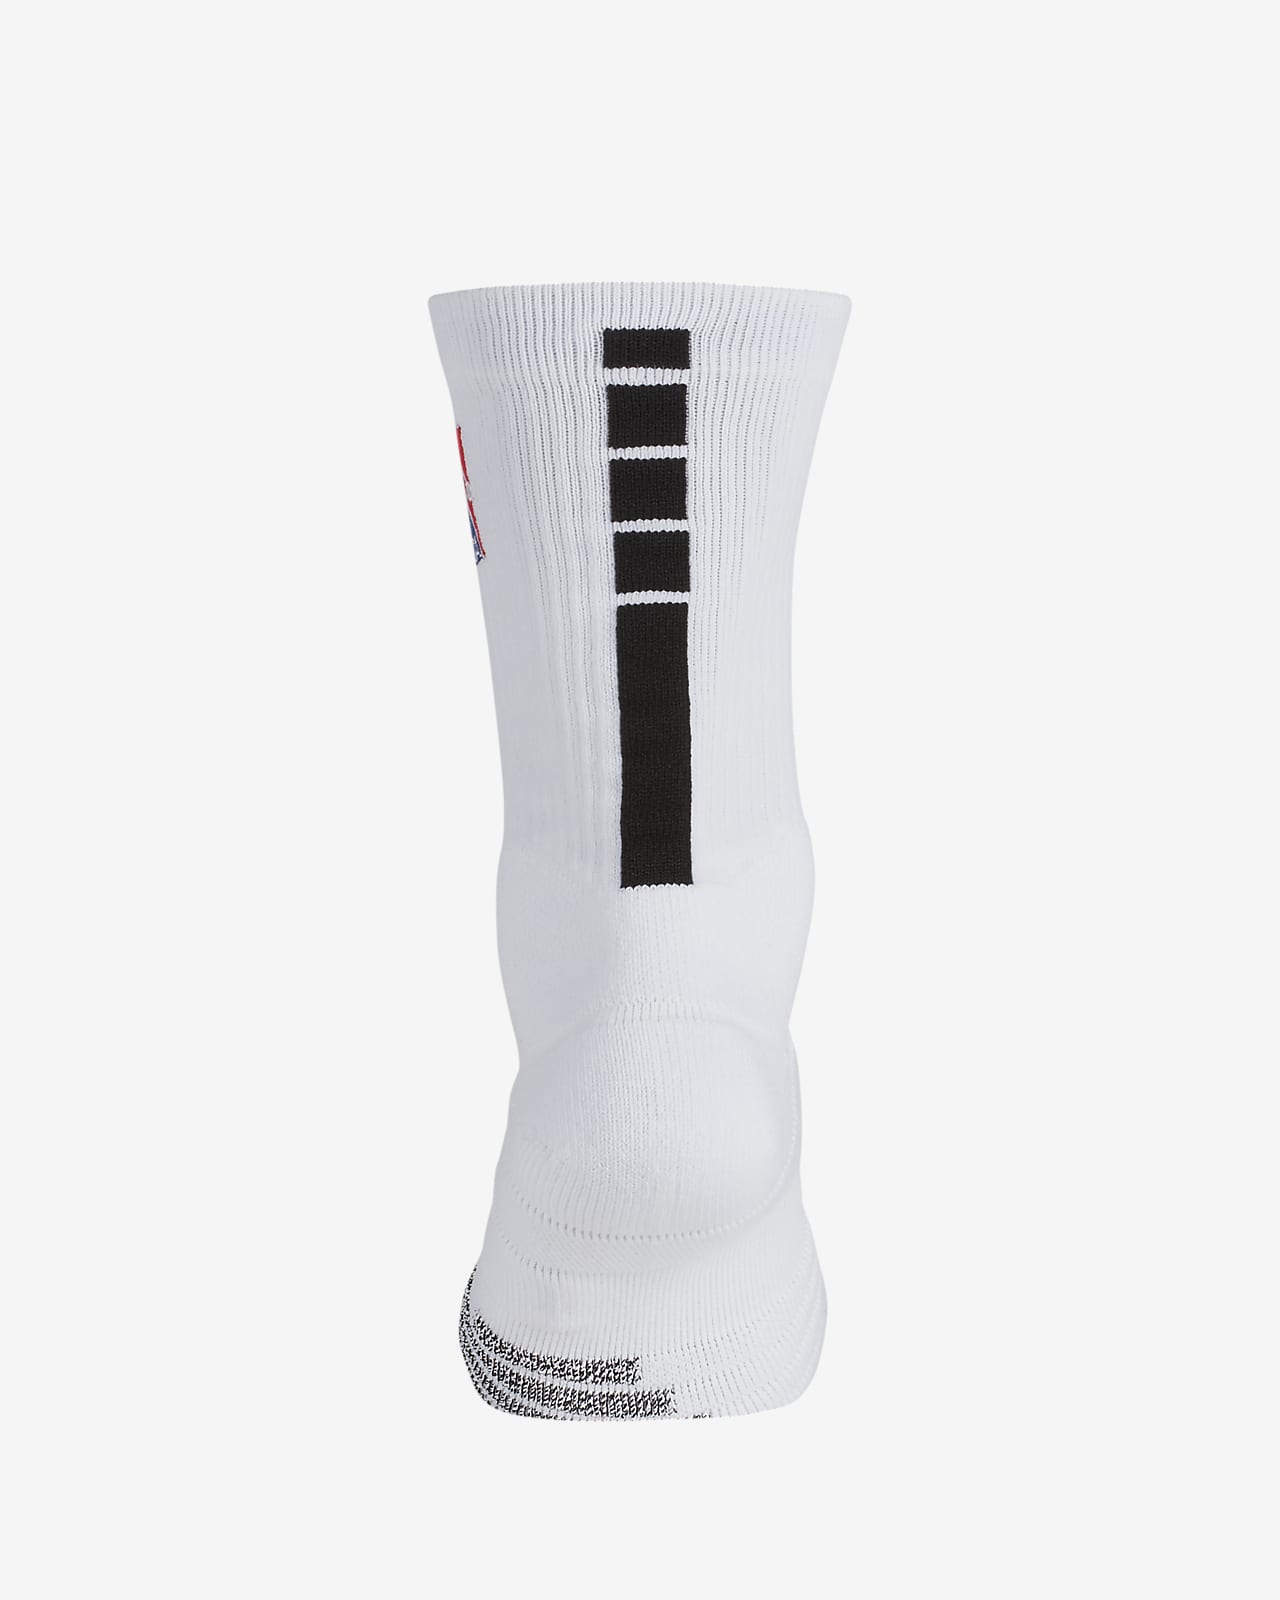 Nike NBA Power Grip Socks  Grip socks, Nike elite socks, Black nike socks